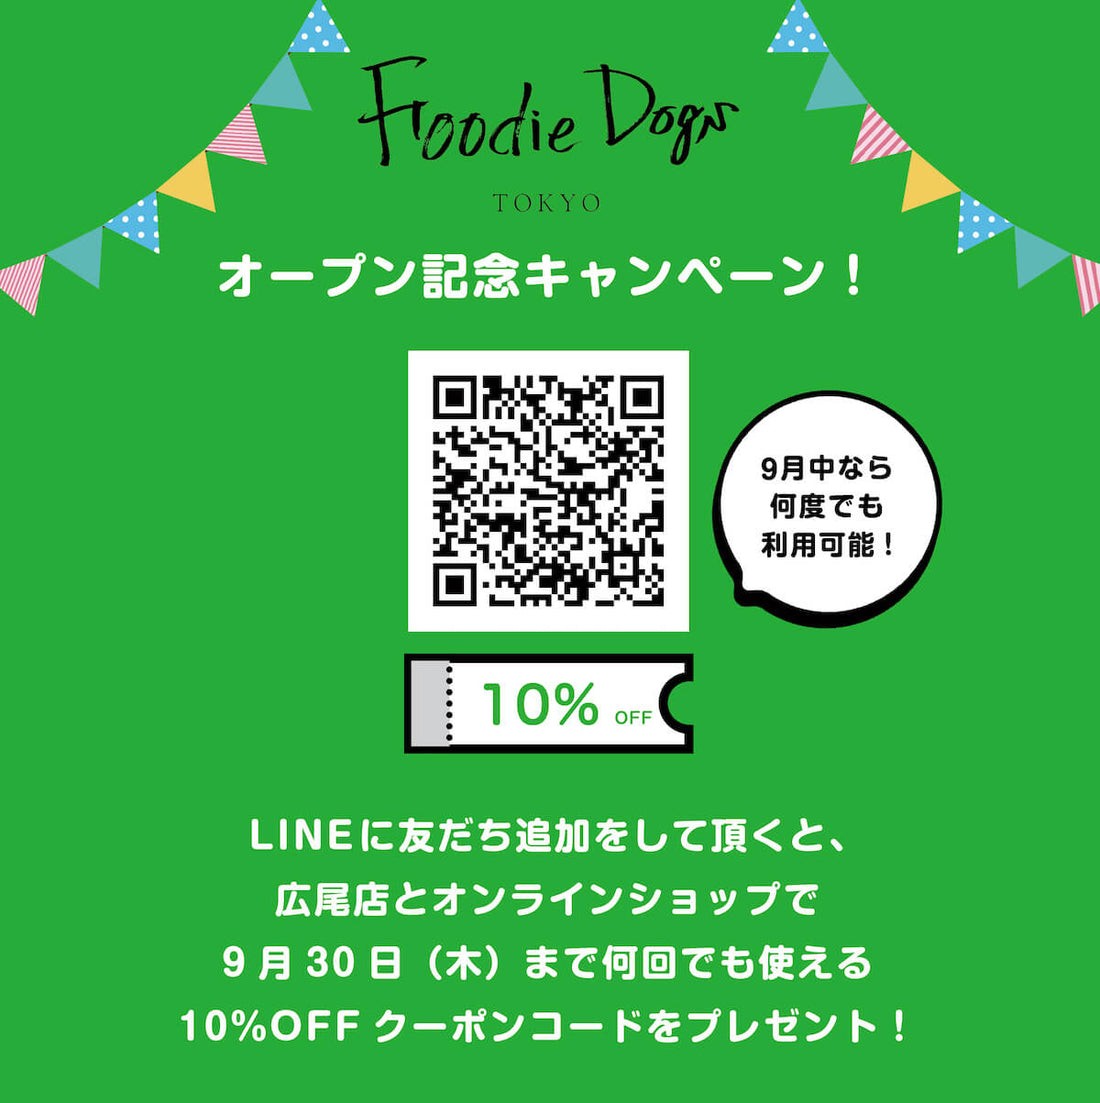 10%OFF！Foodie Dogs TOKYOオープン記念キャンペーン実施中